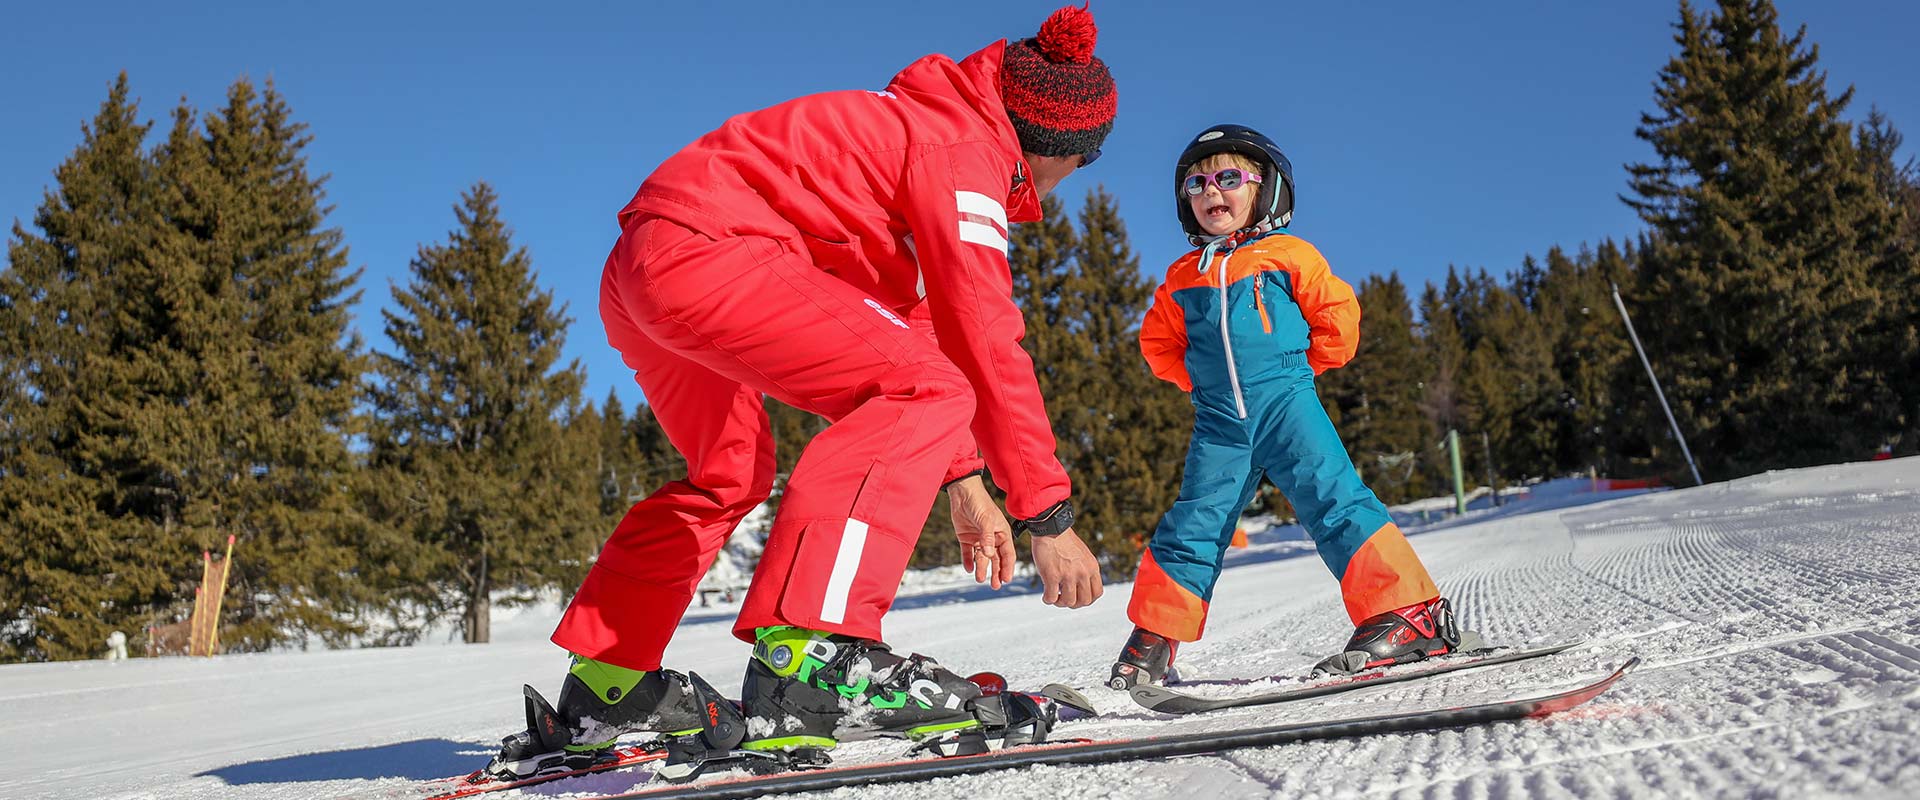 enfant débutant ski alpin